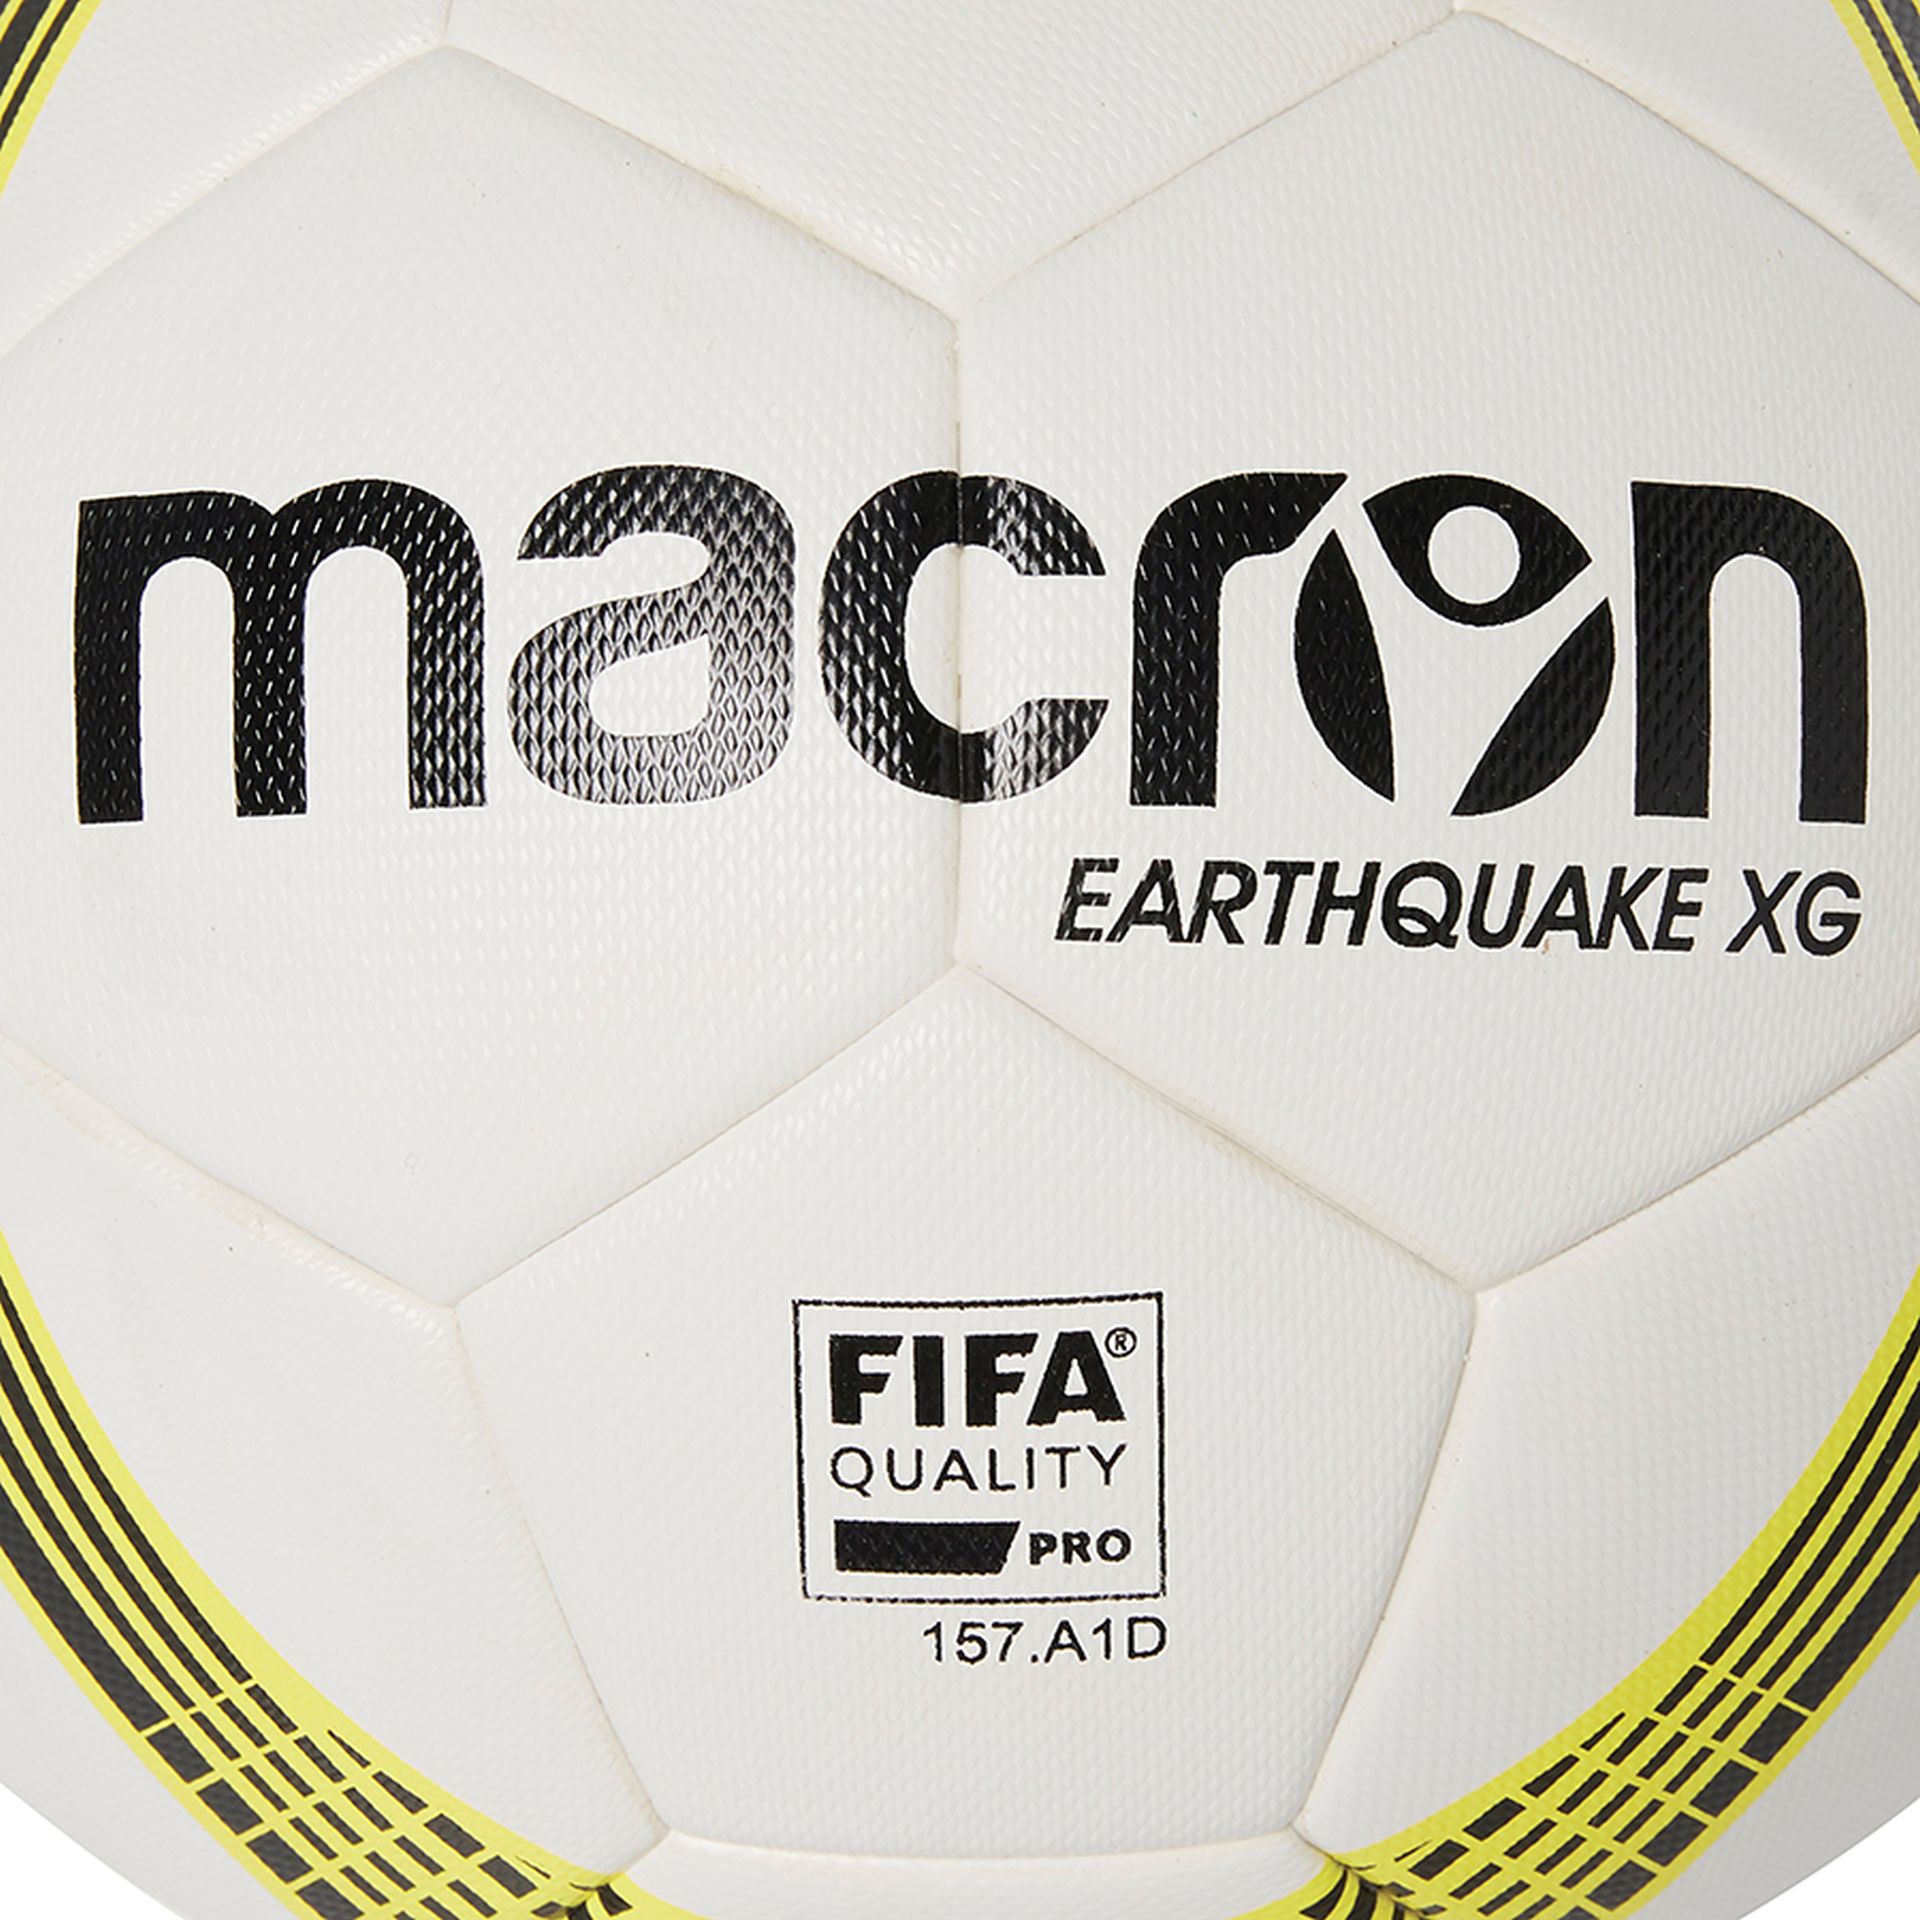 Fifa quality pro. Футбольный мяч Macron Bayou XG. Macron Solstice XG. Мяч Macron earthquake XH (FIFA quality Pro.